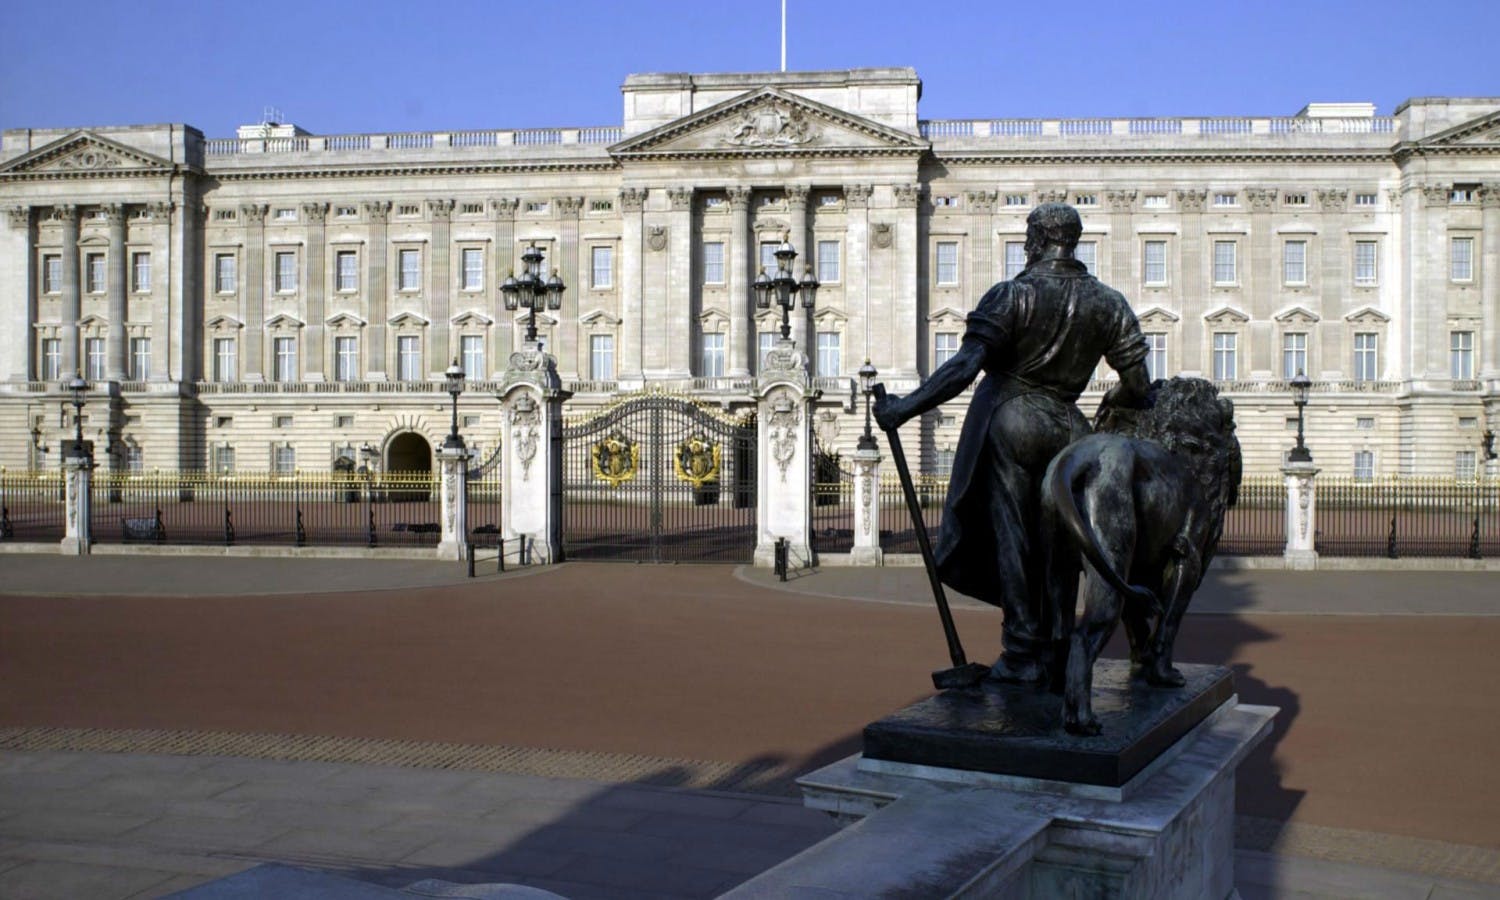 london tour - buckingham palace - front gate - statue.jpg